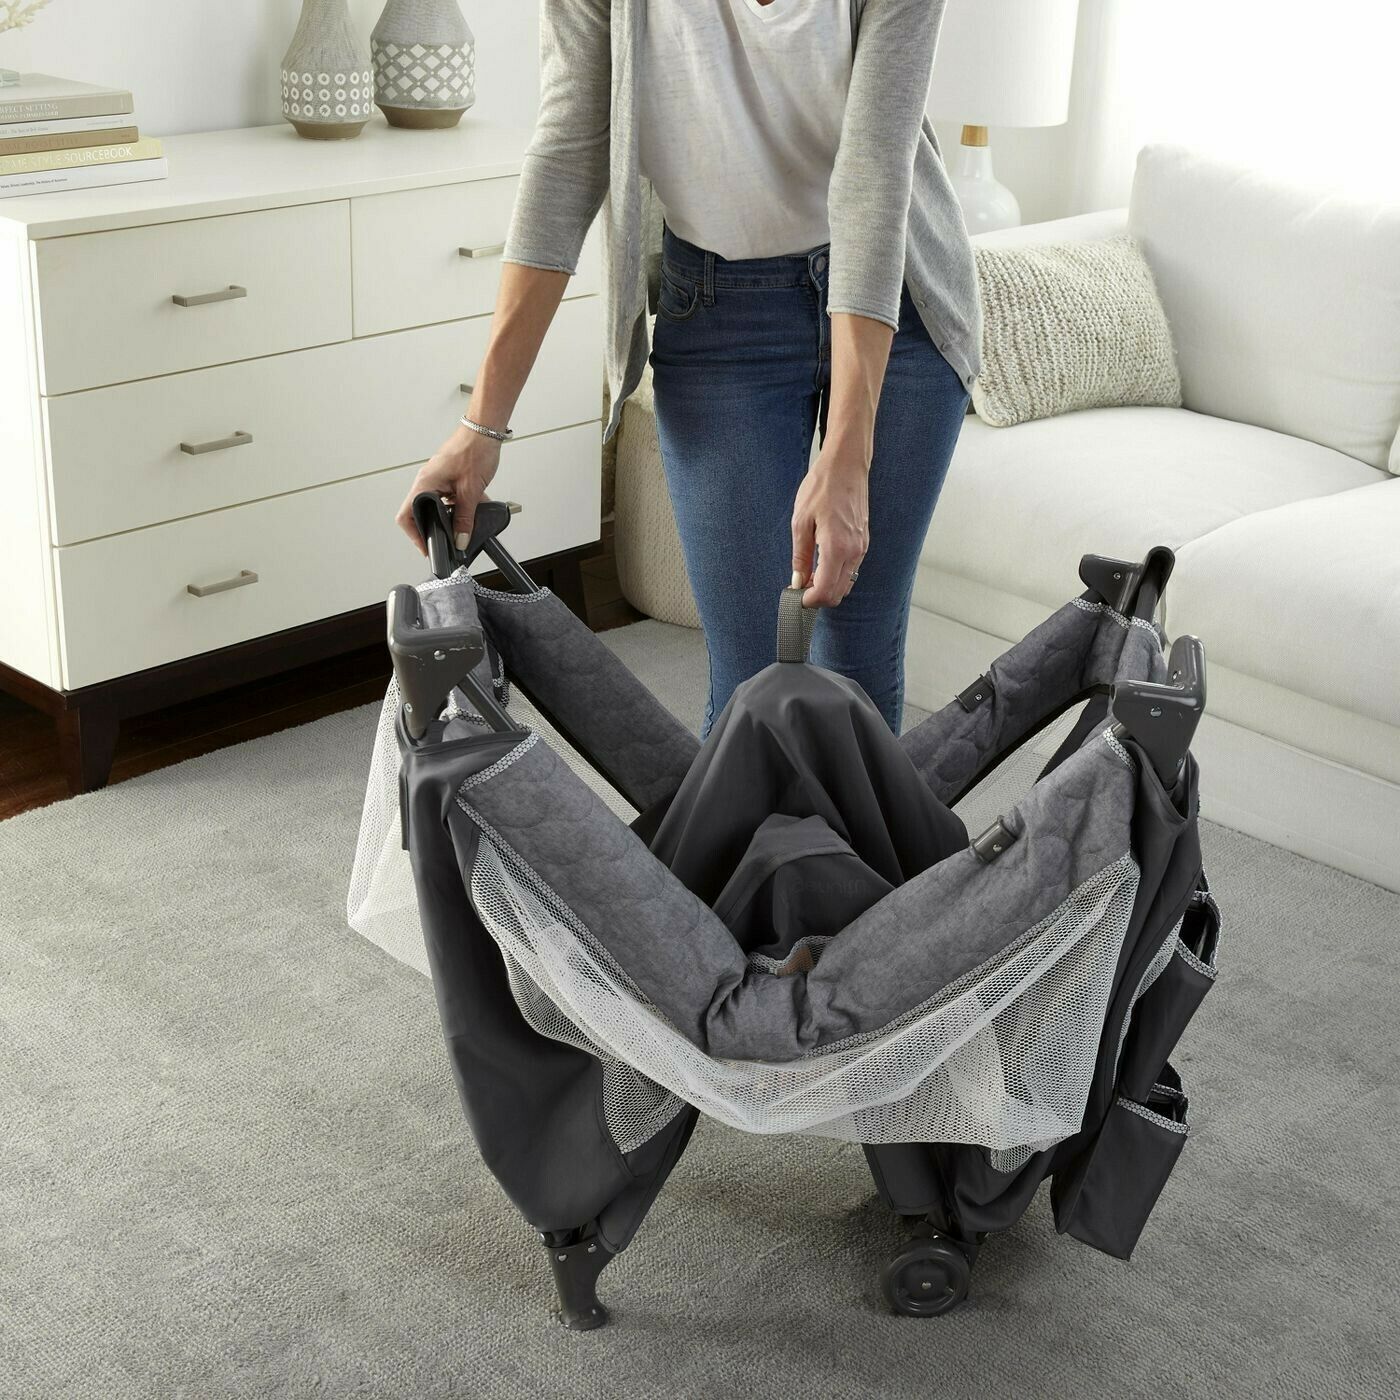 Graco Newborn Baby Travel System with Infant Car Seat Playard Crib Bag Set